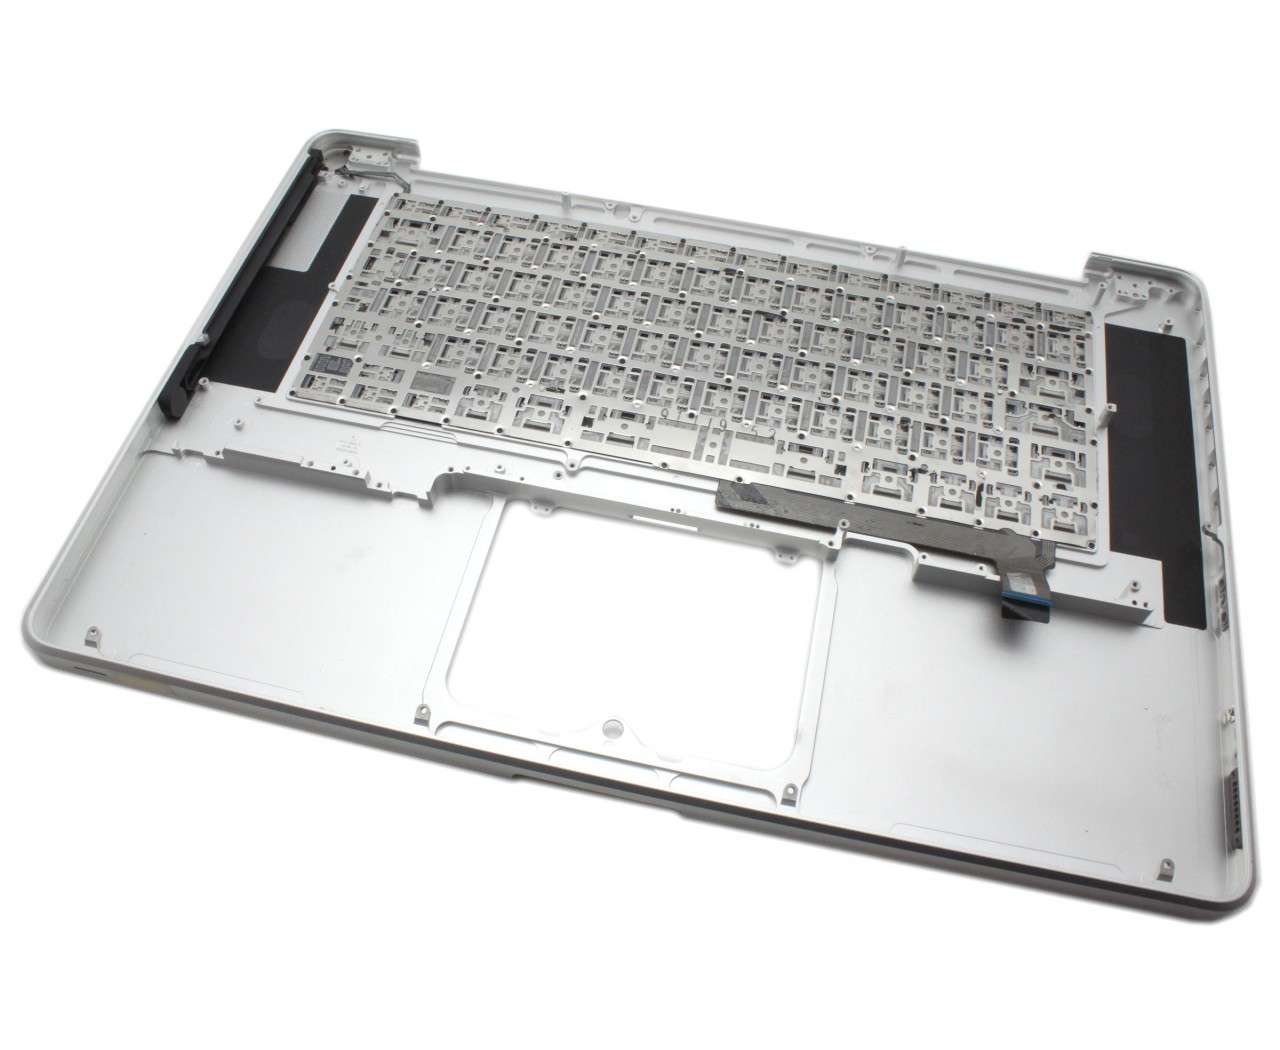 Tastatura Apple MacBook Pro 15 MC723LL A Neagra cu Palmrest Argintiu Refurbished Apple Apple